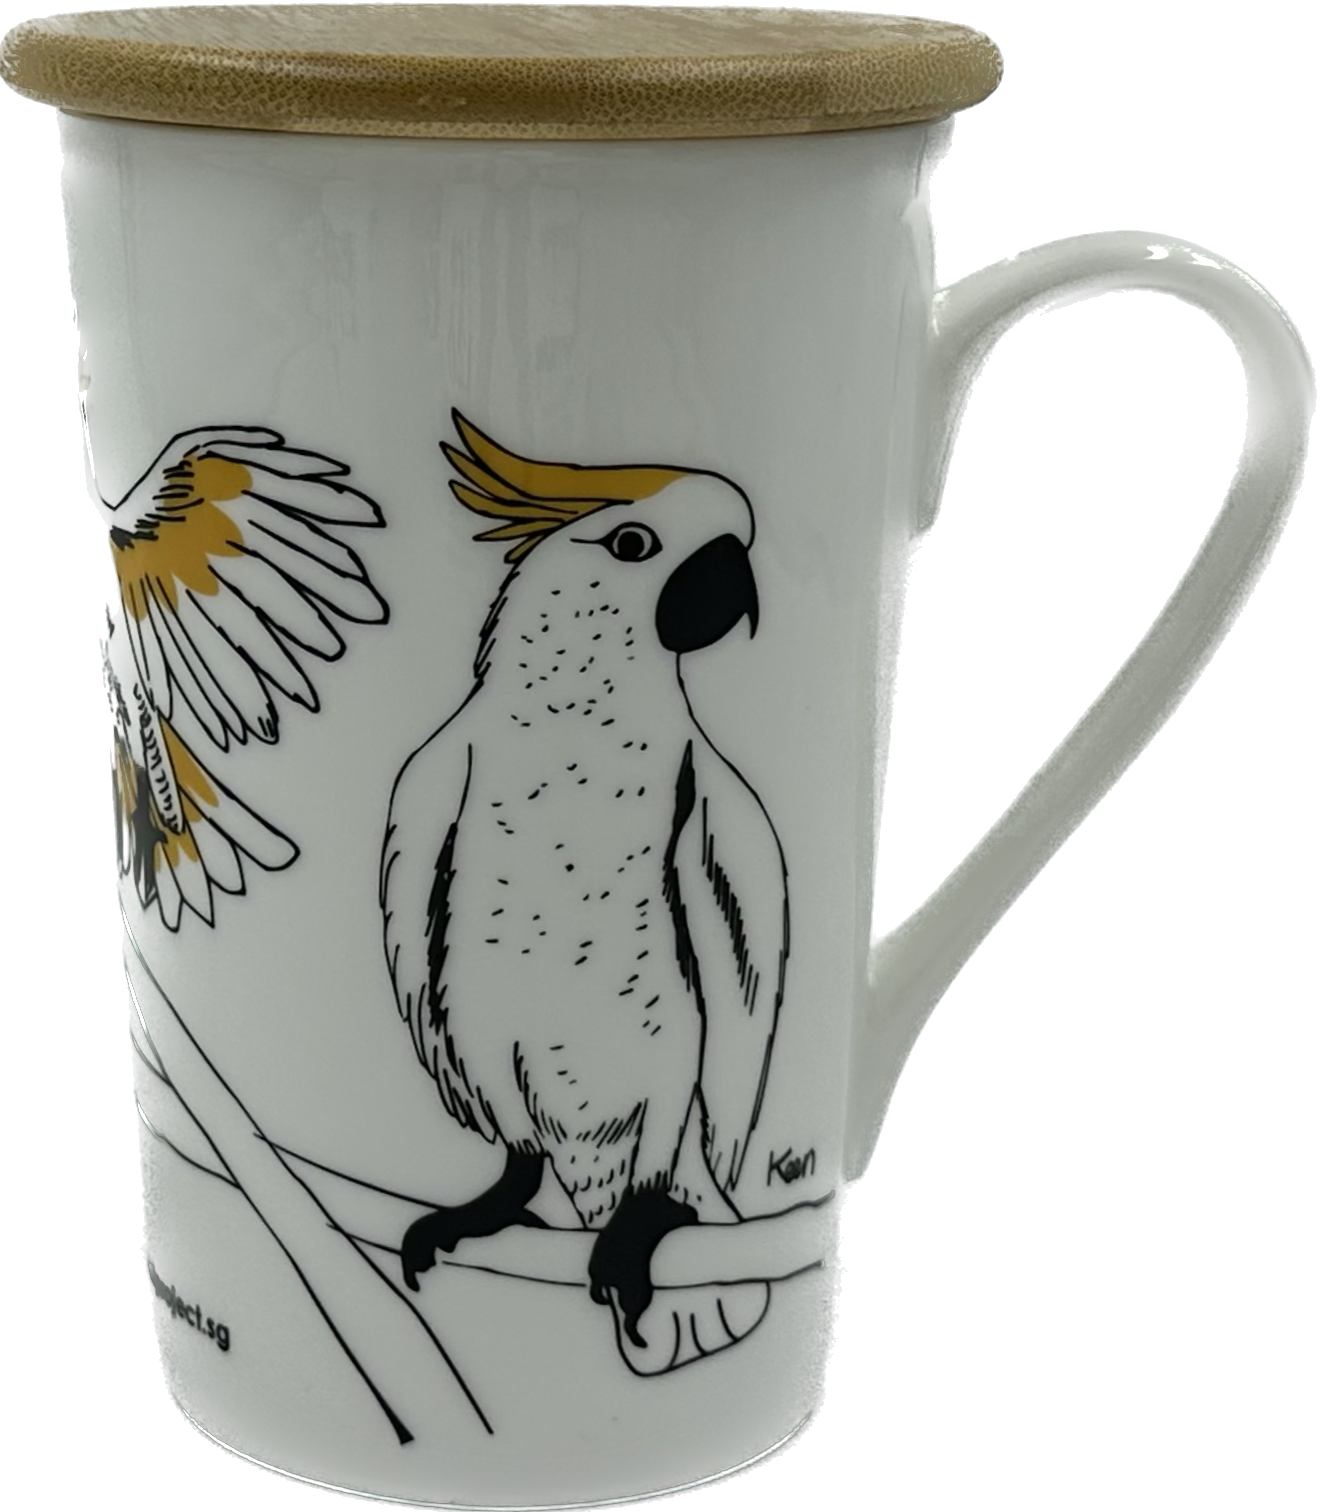 Tall Mug w/ Bamboo Lid - Cockatoo Design | The Animal Project